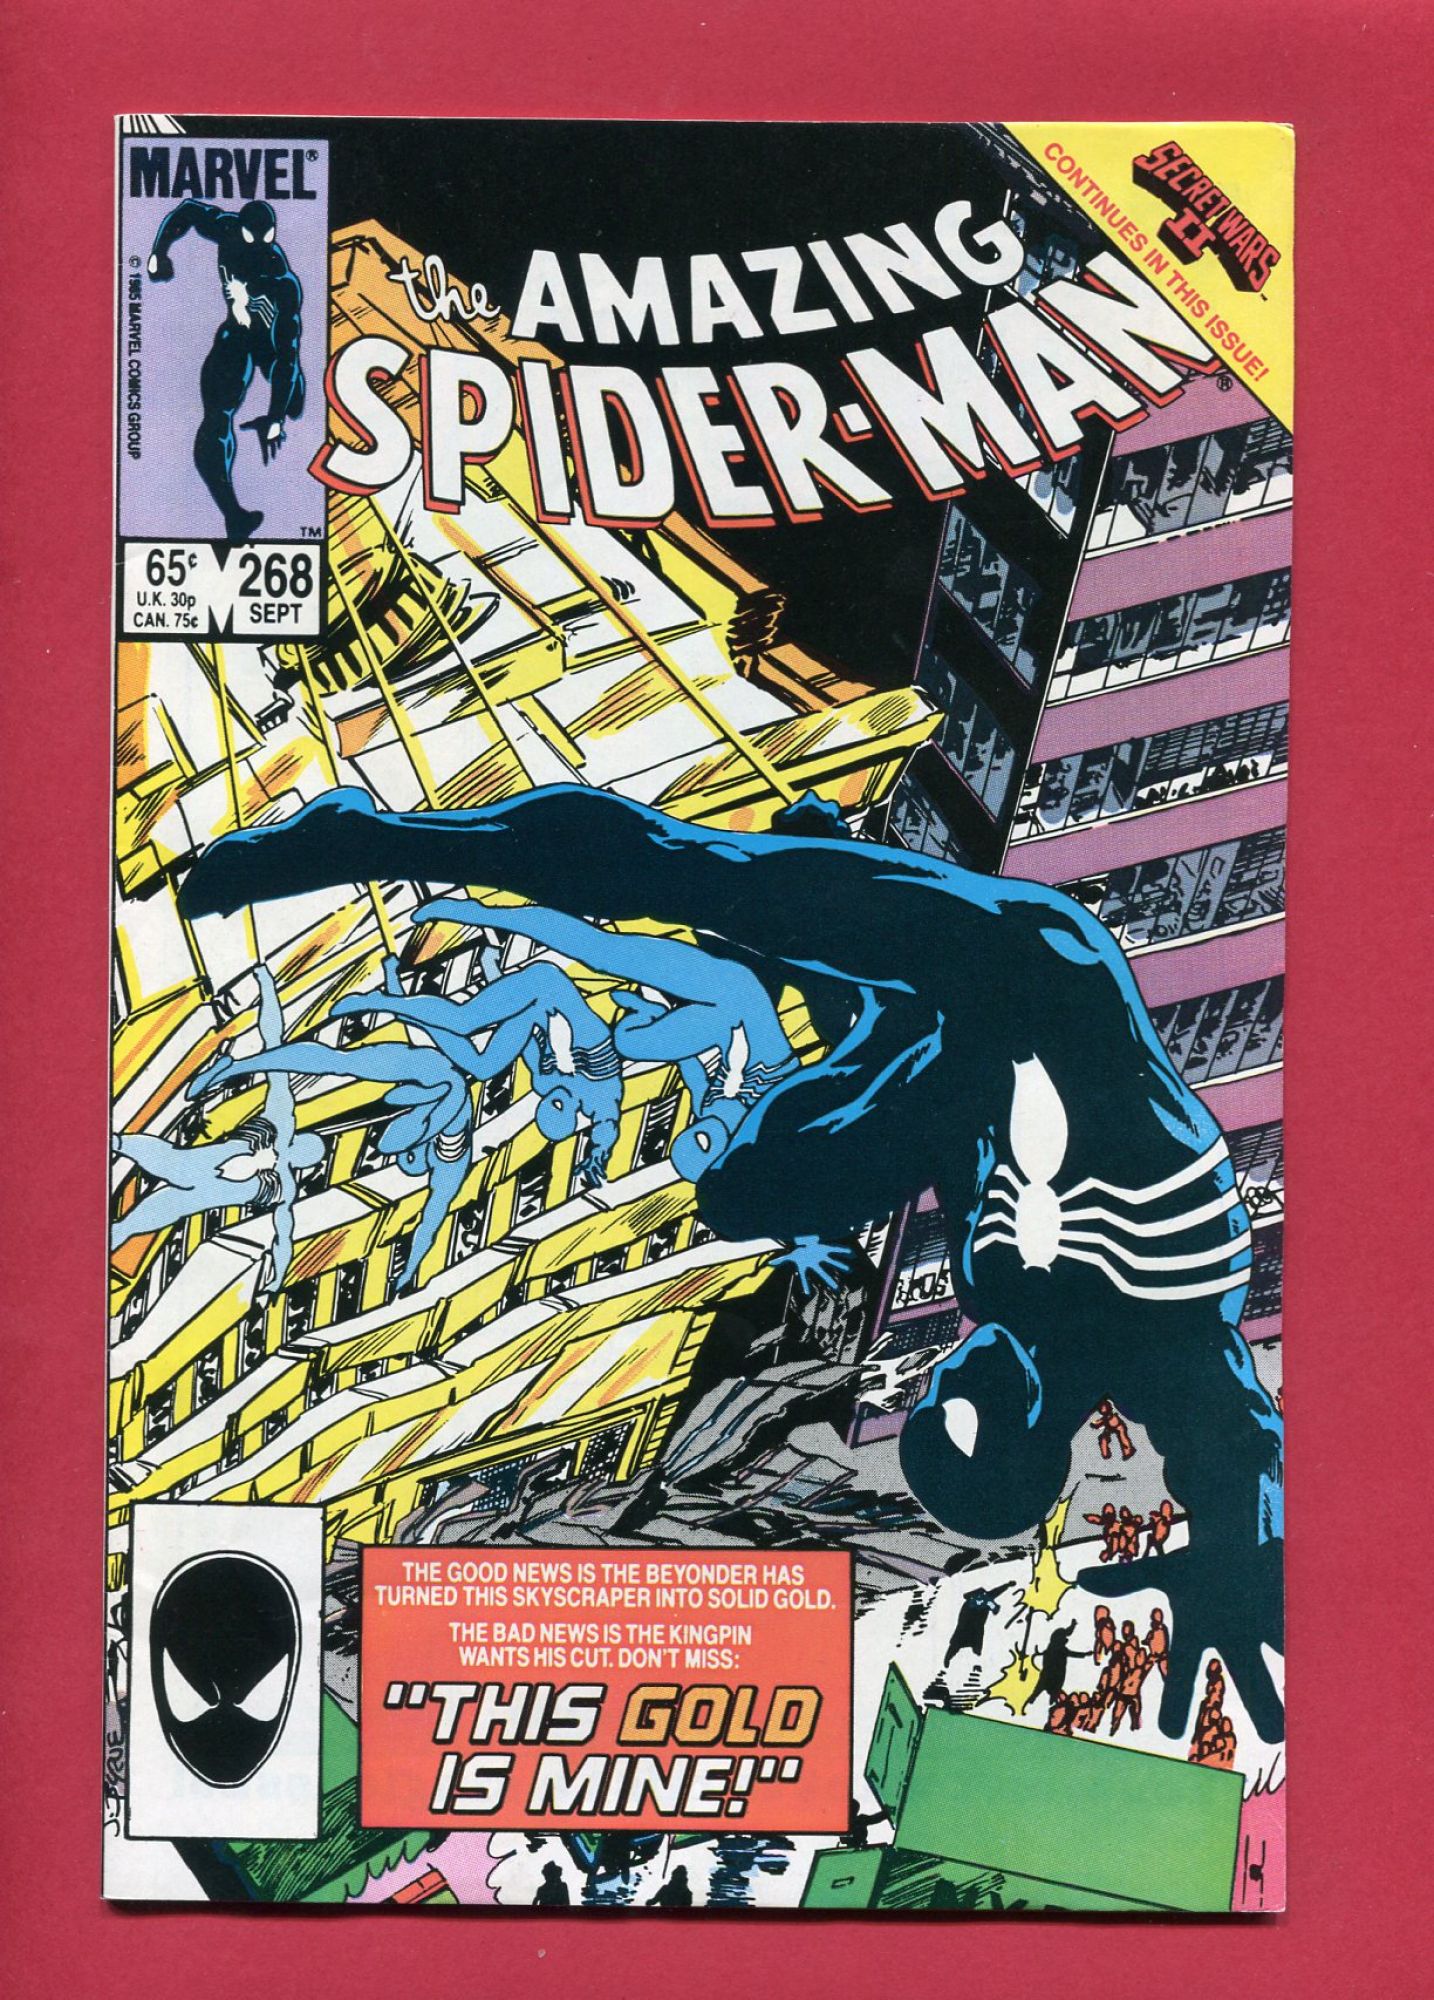 Amazing Spider-Man #268, Sep 1985, 8.5 VF+